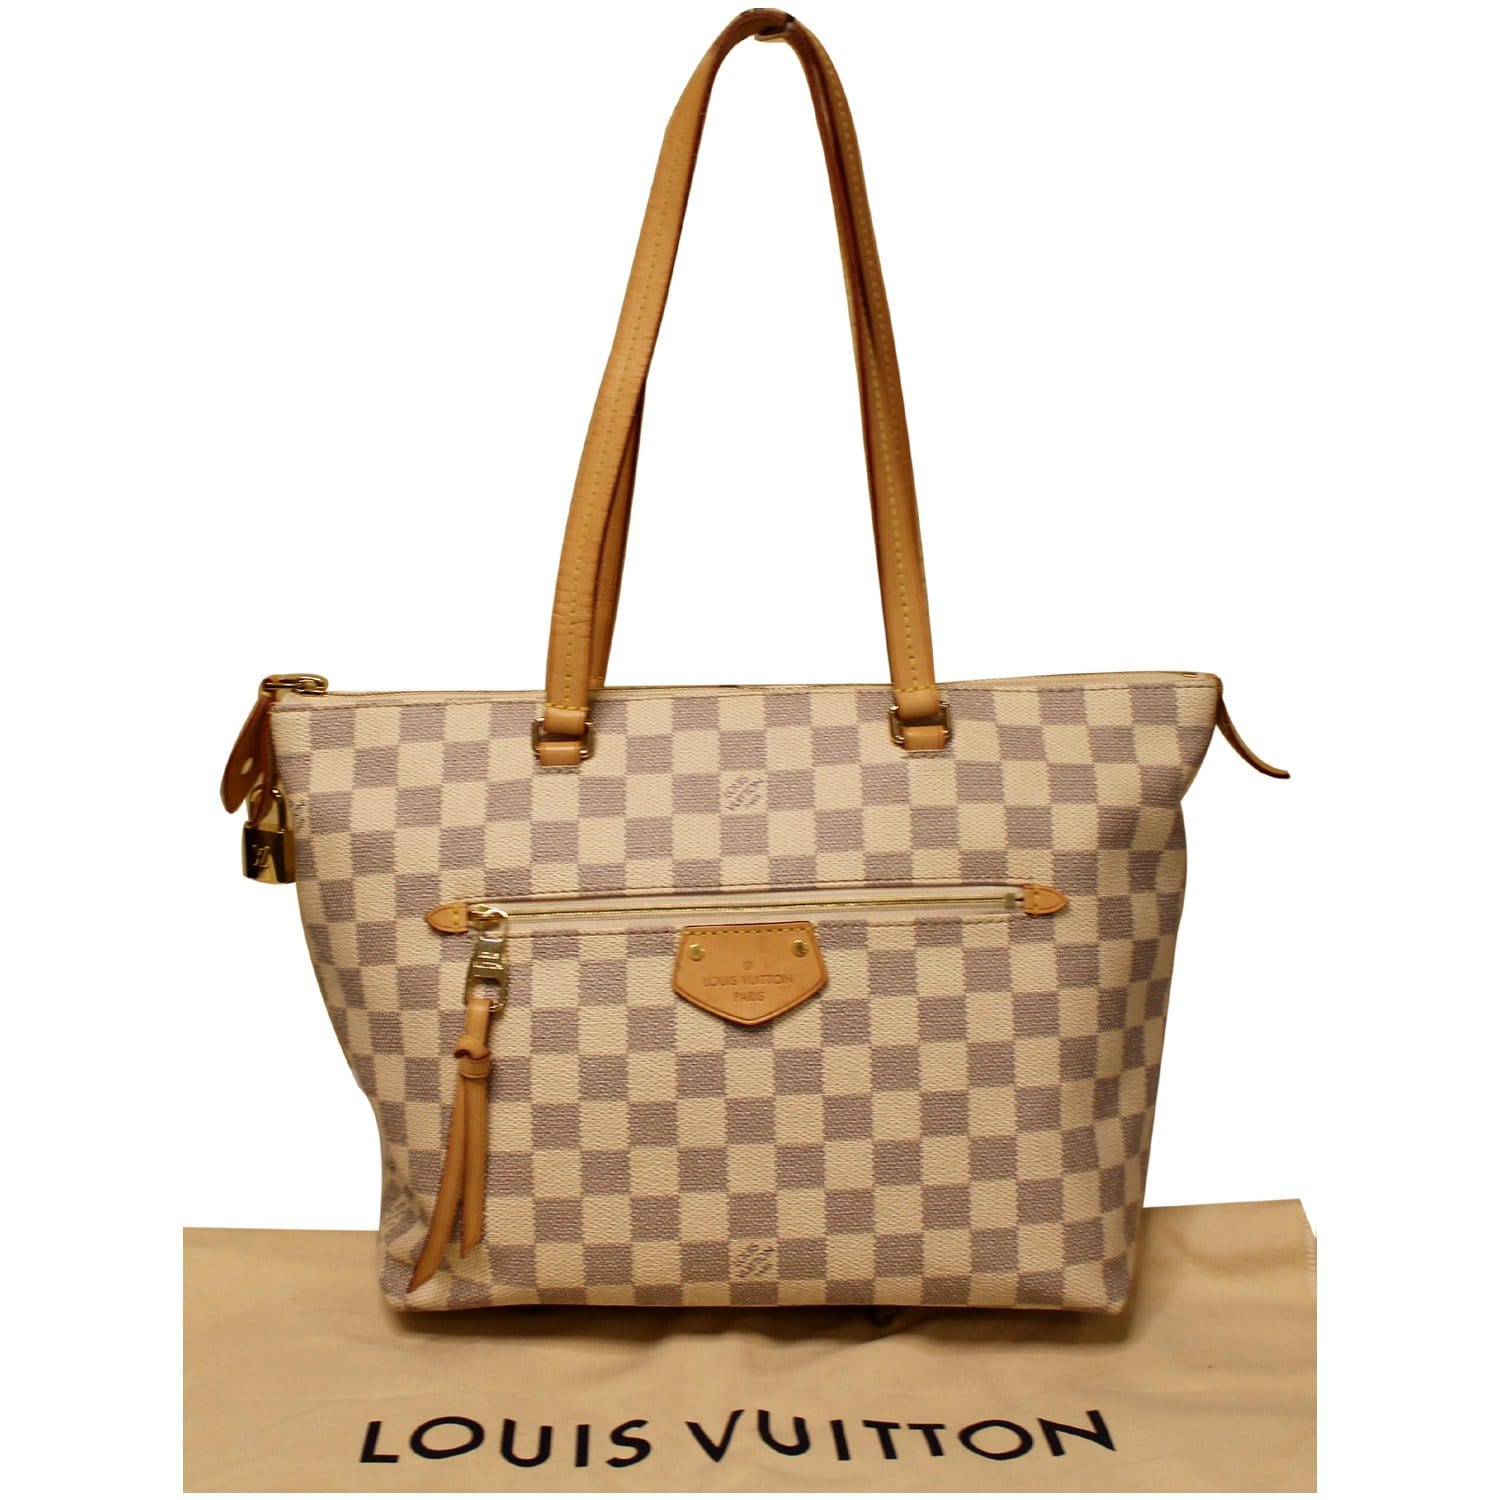 Tote Bag Organizer For Louis Vuitton Siena PM Bag